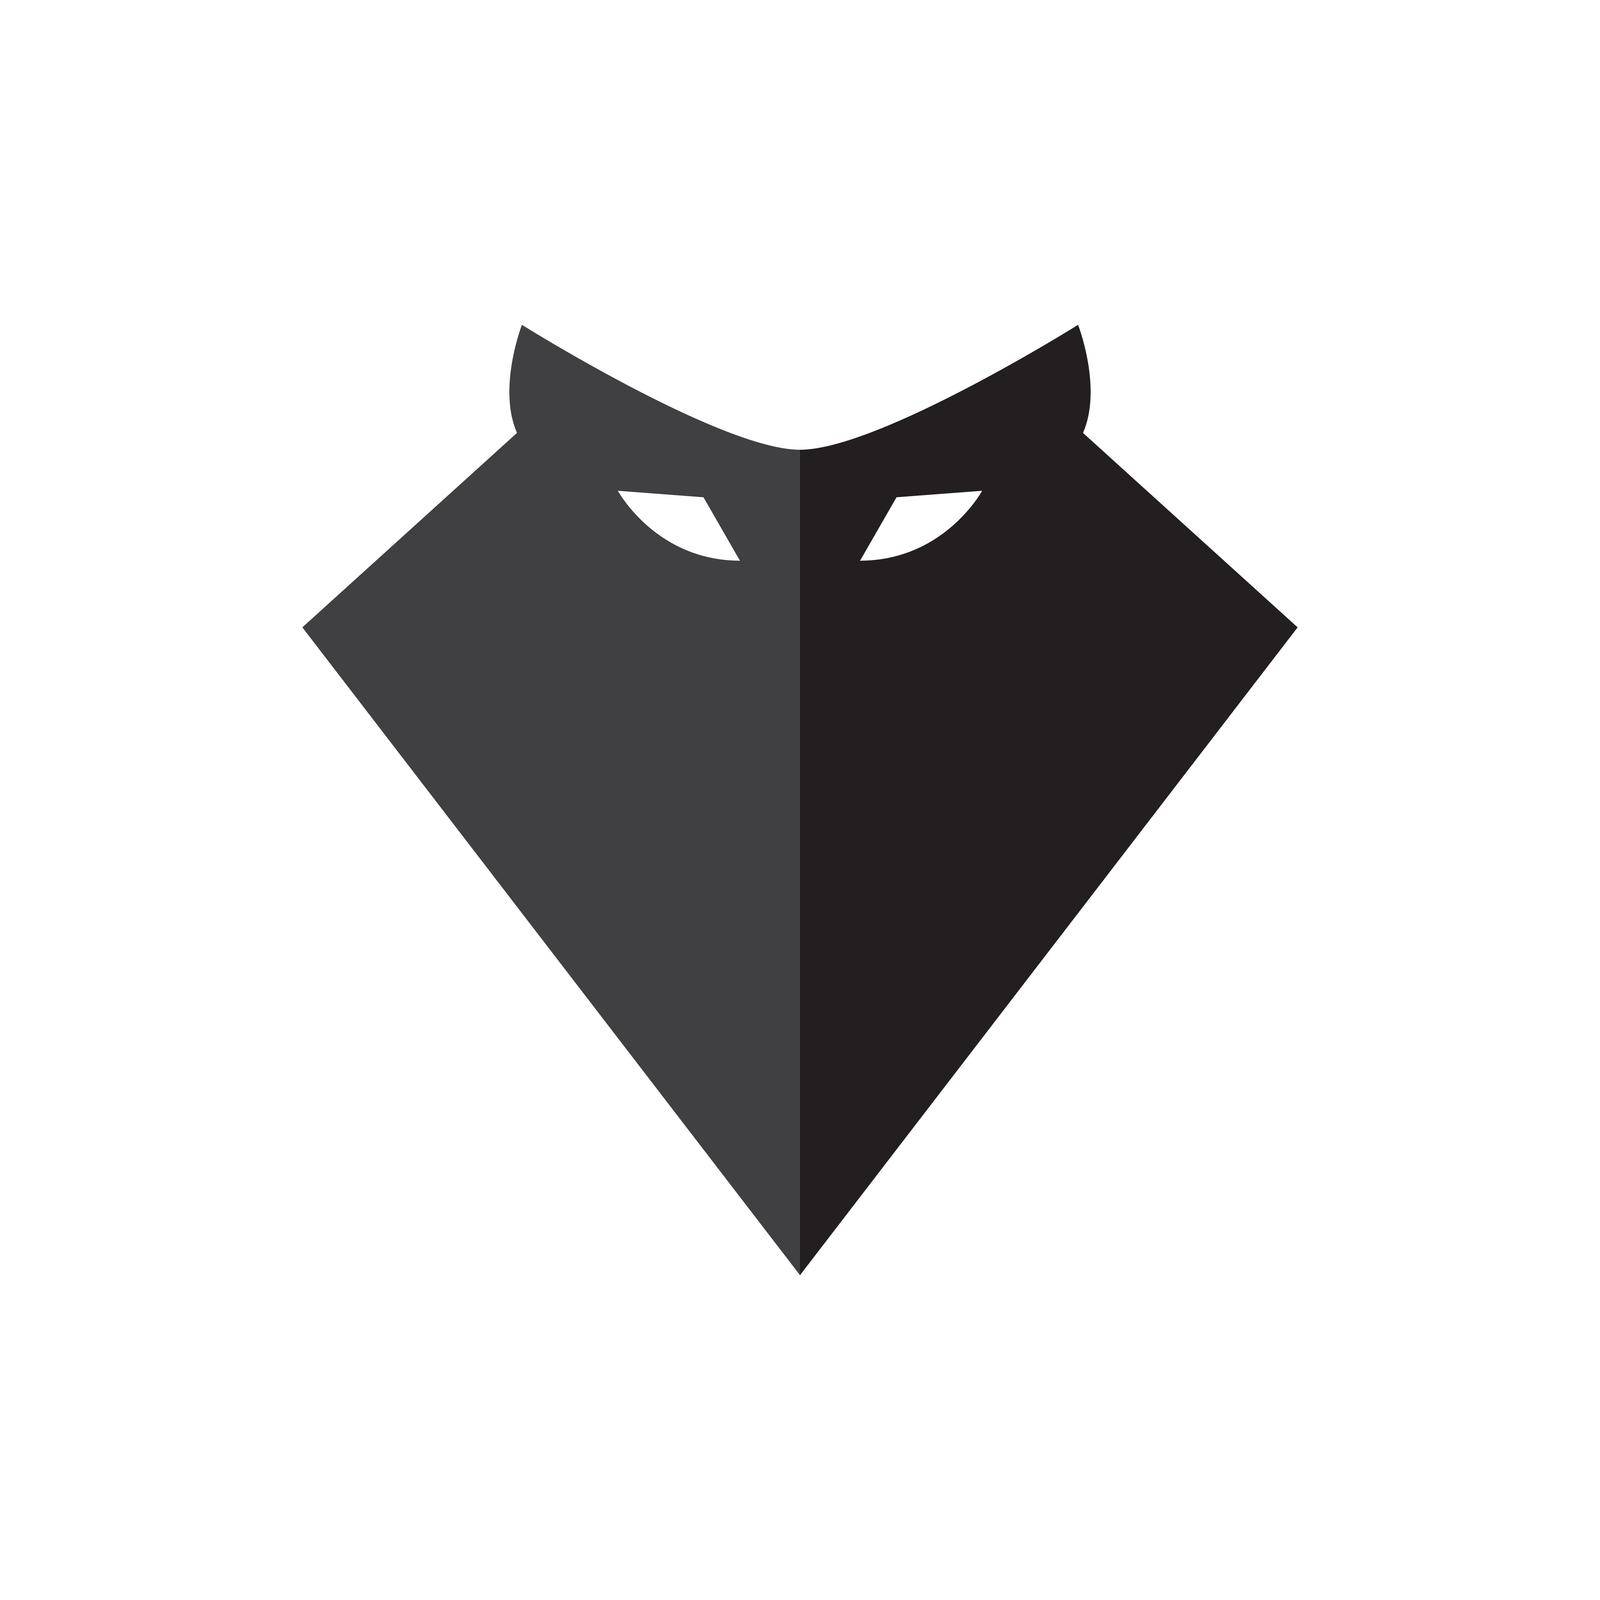 Bat illustration logo by awk